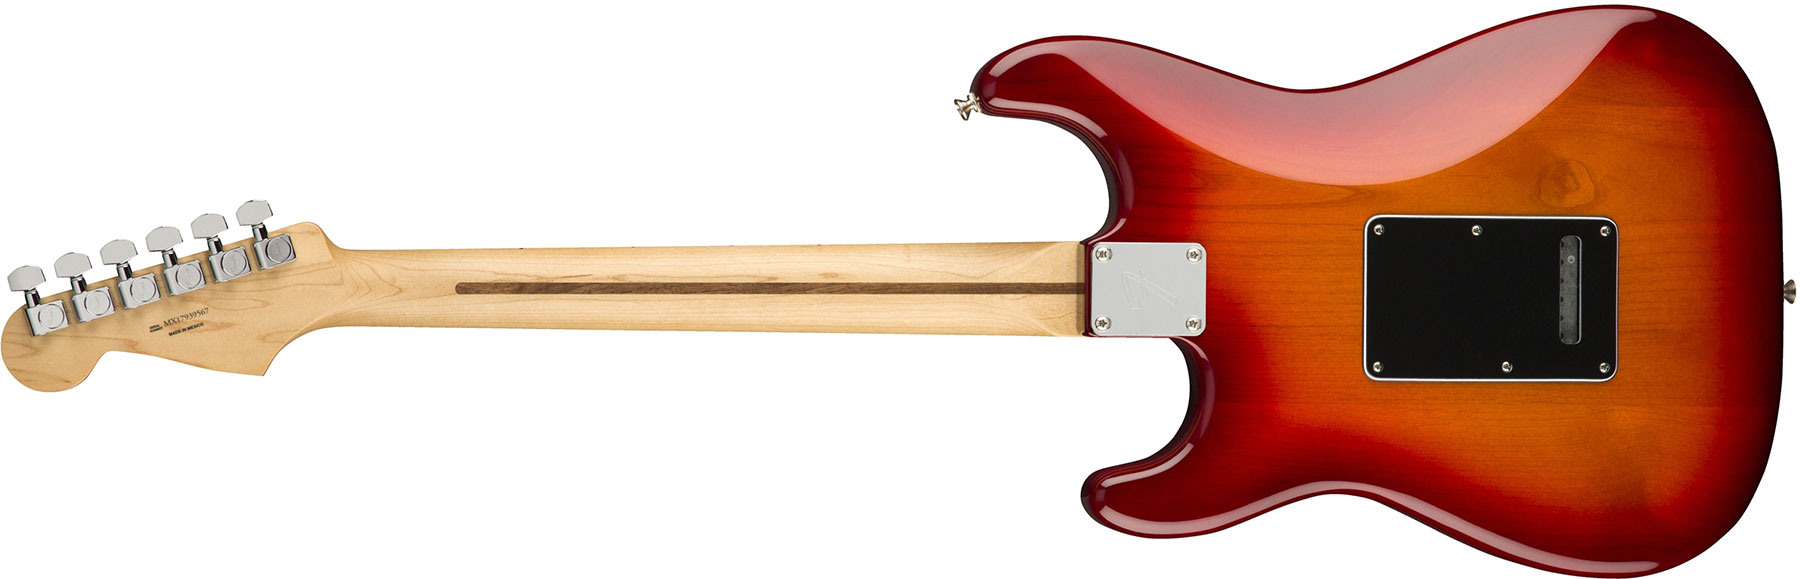 Fender Strat Player Plus Top Mex Hss Mn - Aged Cherry Burst - Str shape electric guitar - Variation 1